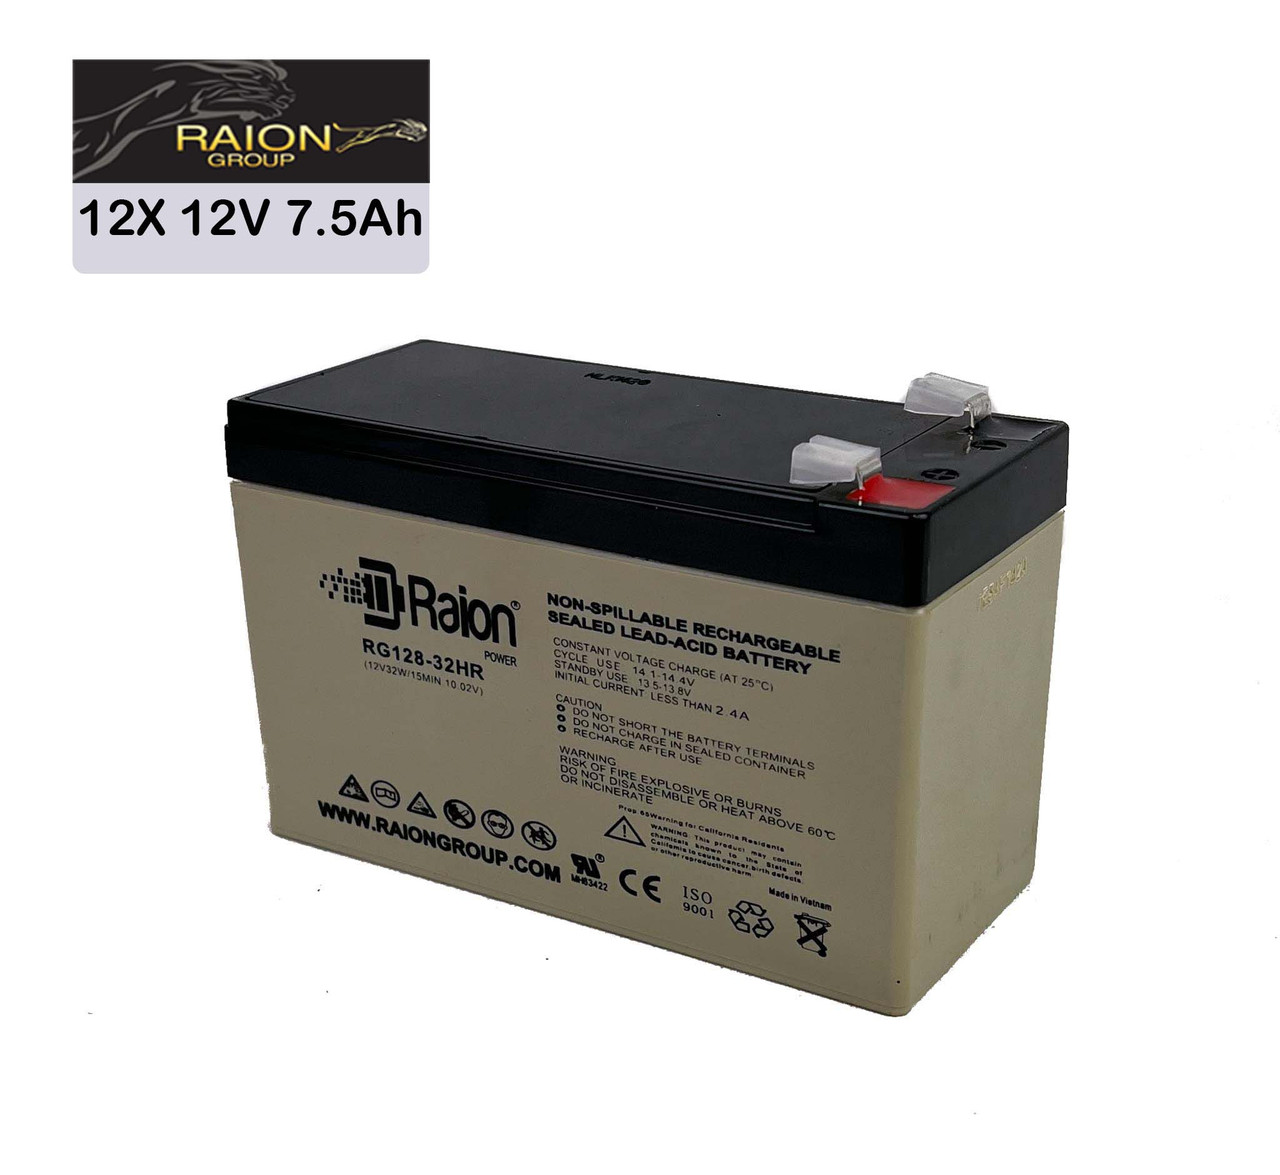 Raion Power 12V 7.5Ah High Rate Discharge UPS Batteries for Alpha Technologies ALI Plus BP 1500-3000 - 12 Pack